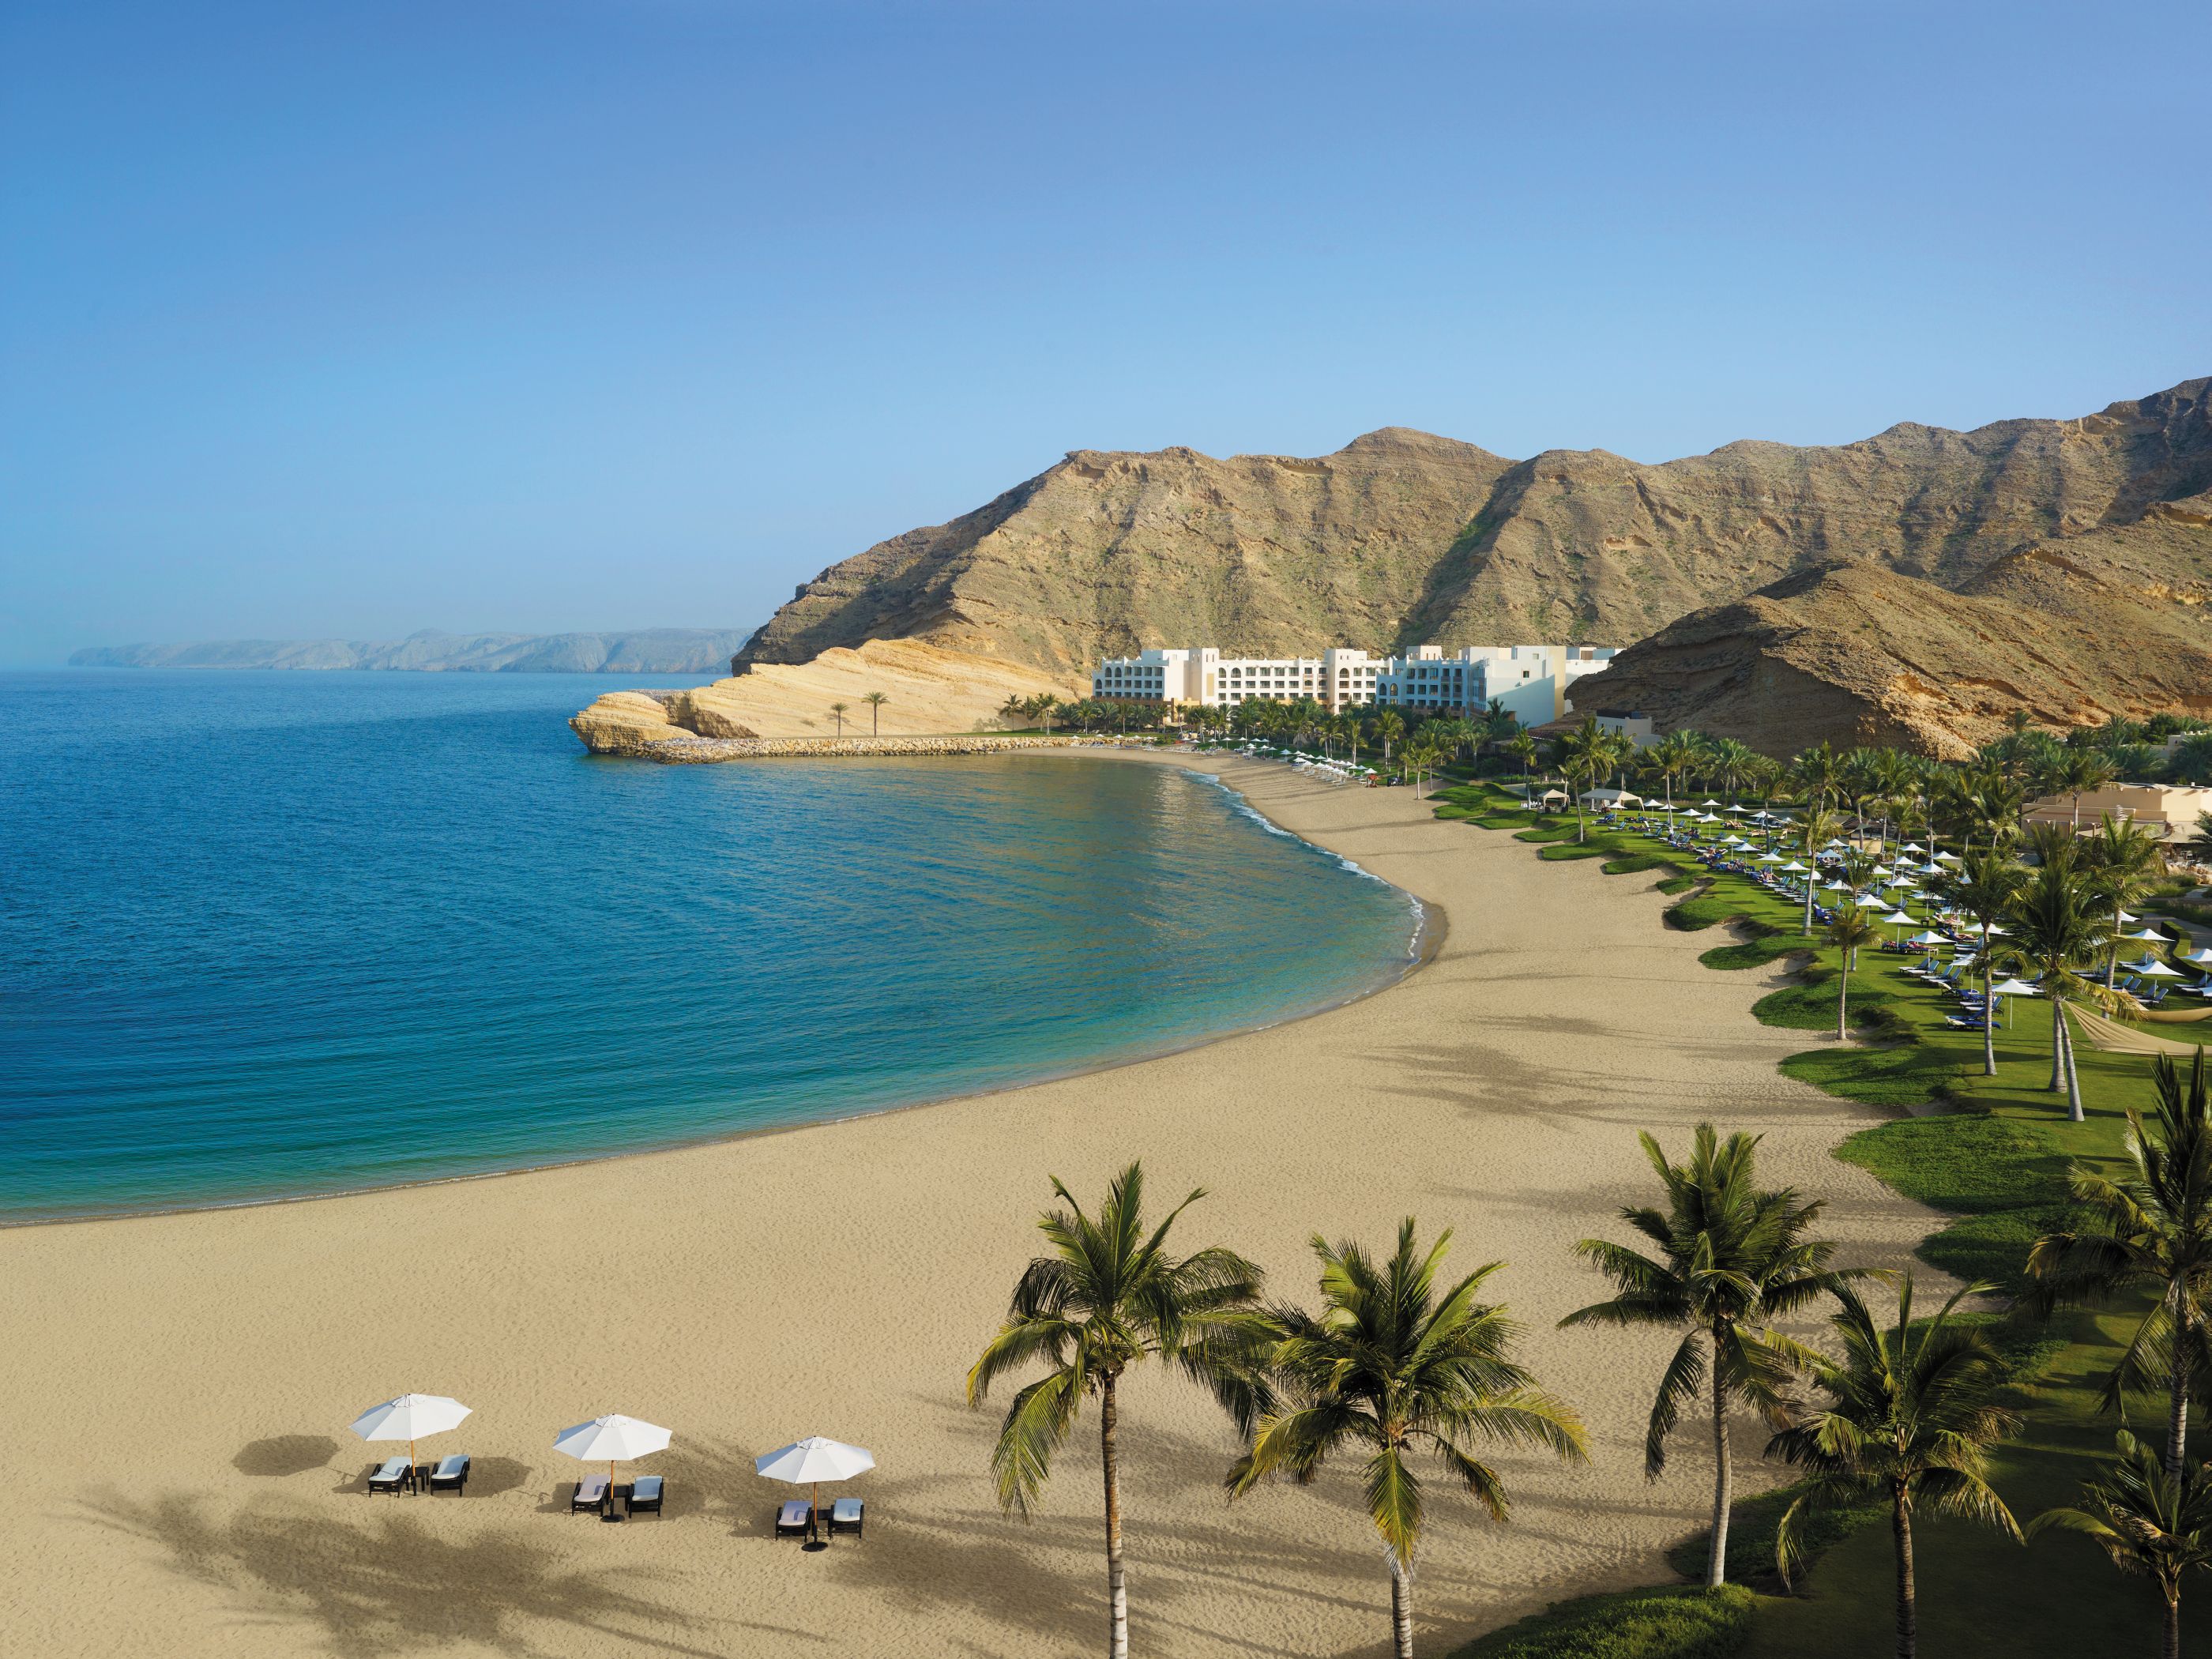 The private beach of Shangri la al Bandar, Oman